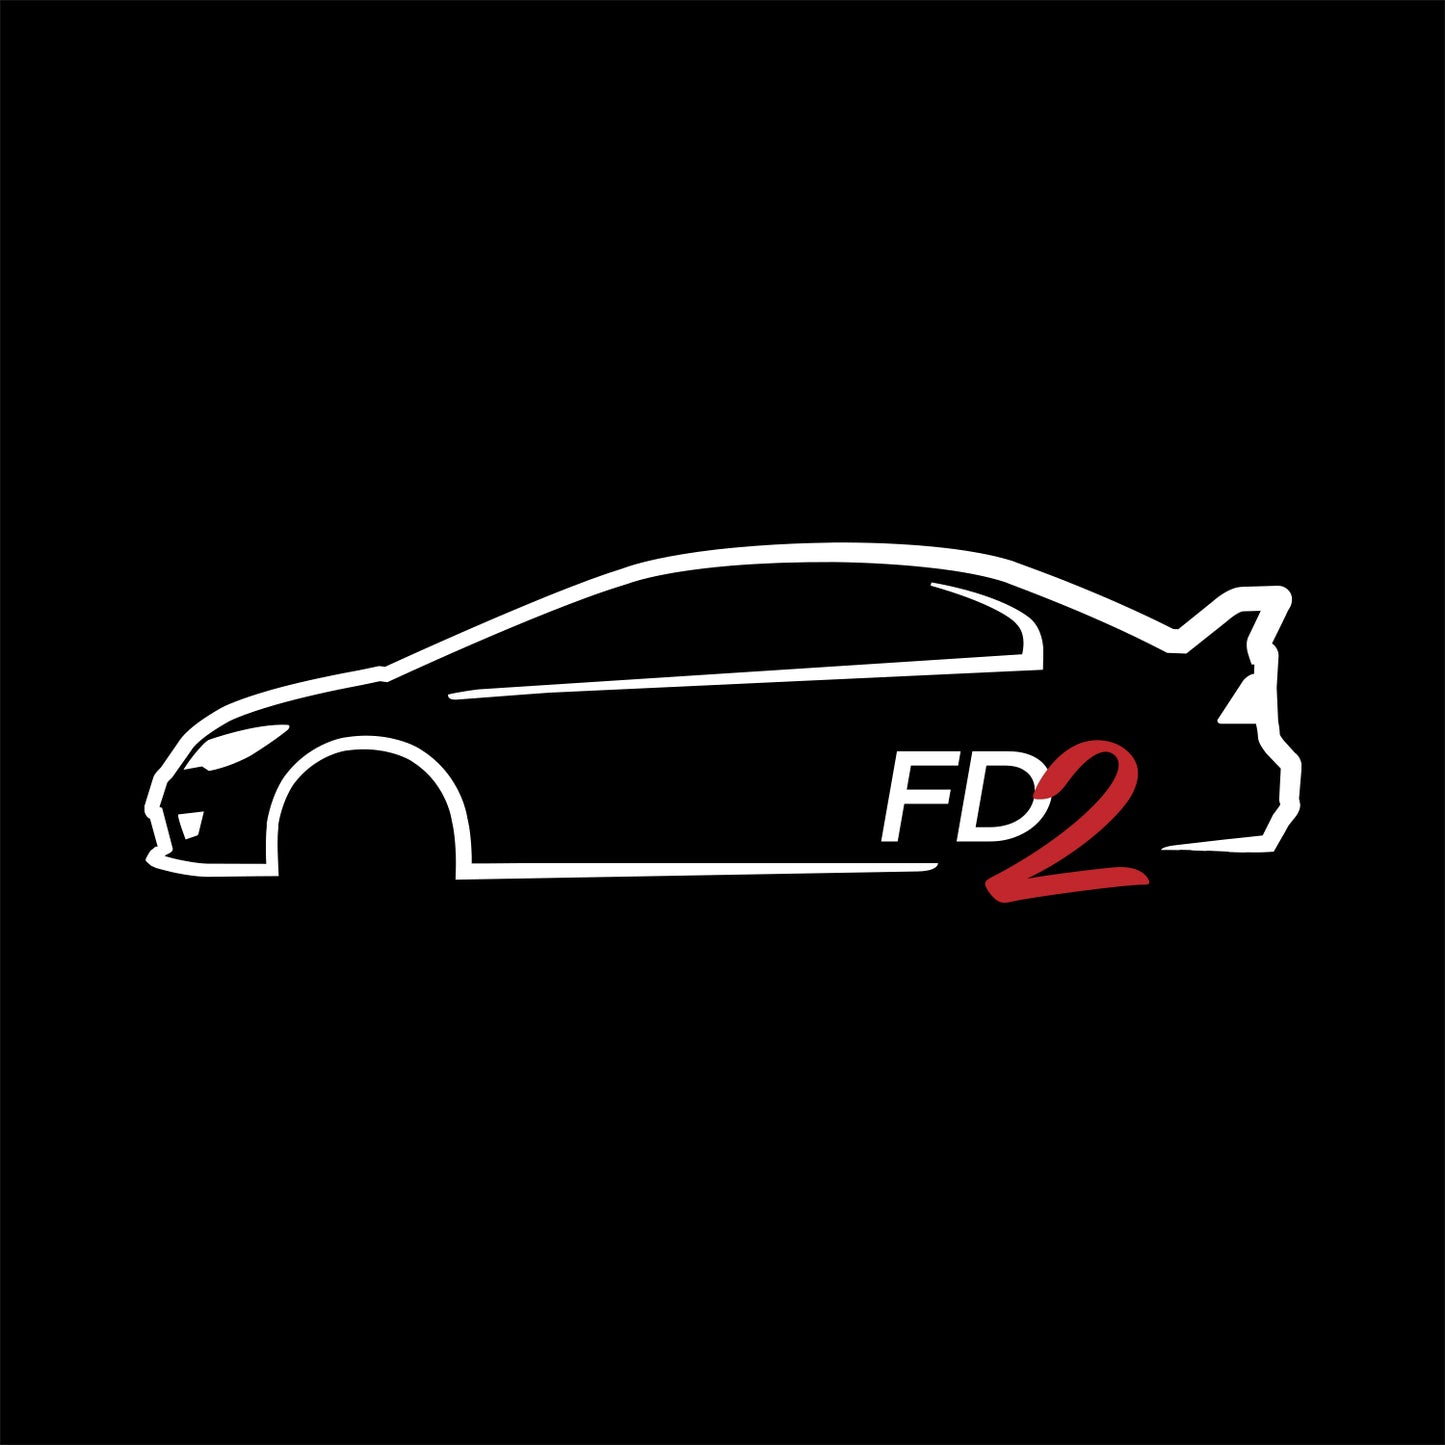 FD2 JDM Civic Type R Inspired T-Shirt